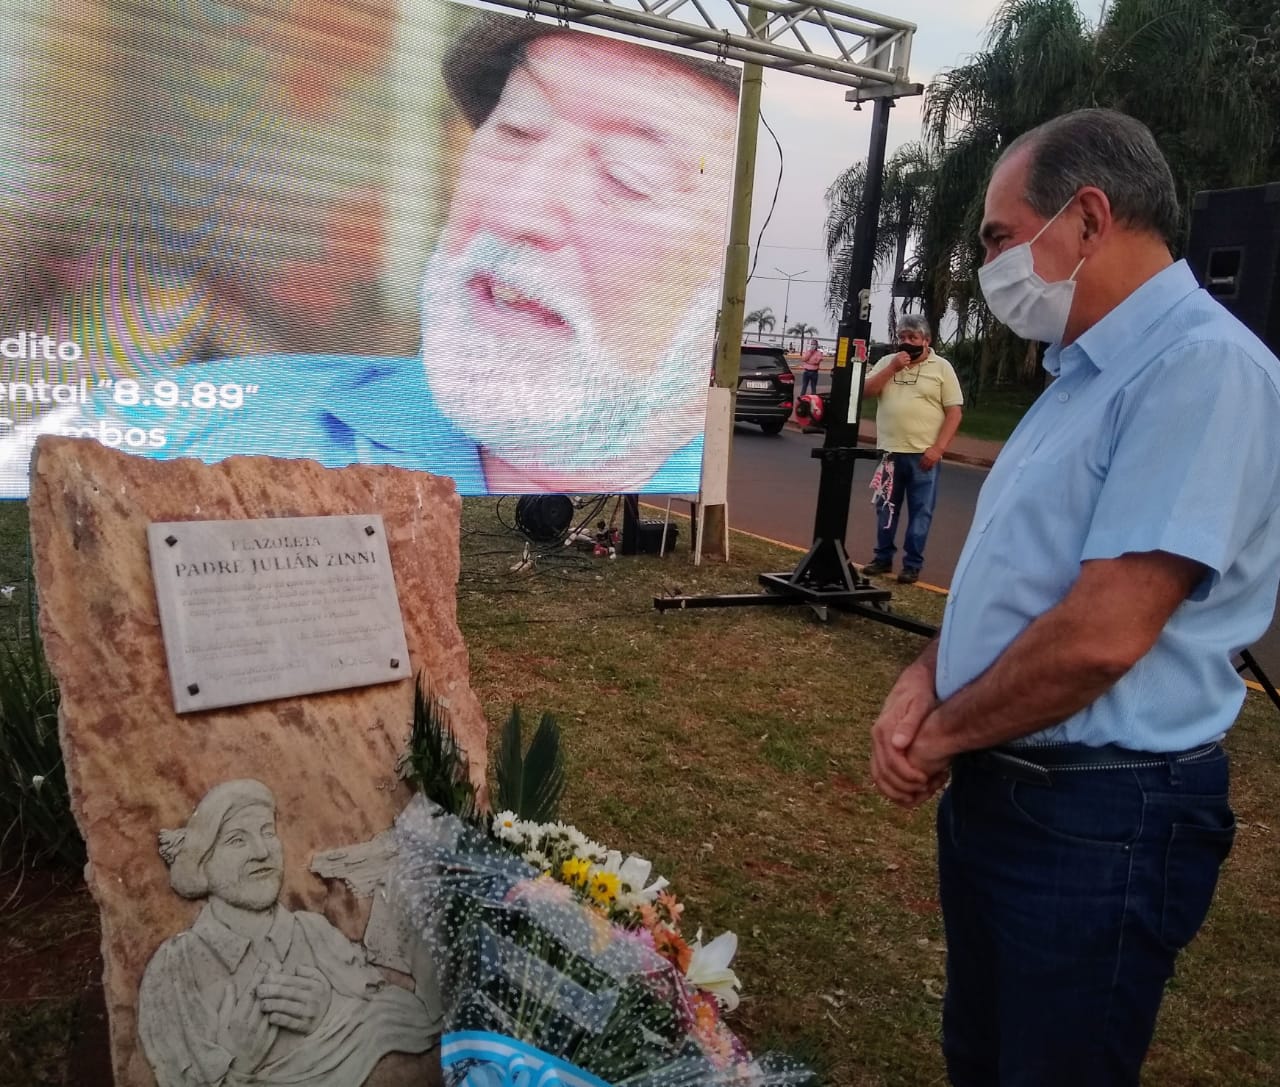 Stelatto rindió homenaje al padre Julián Zini